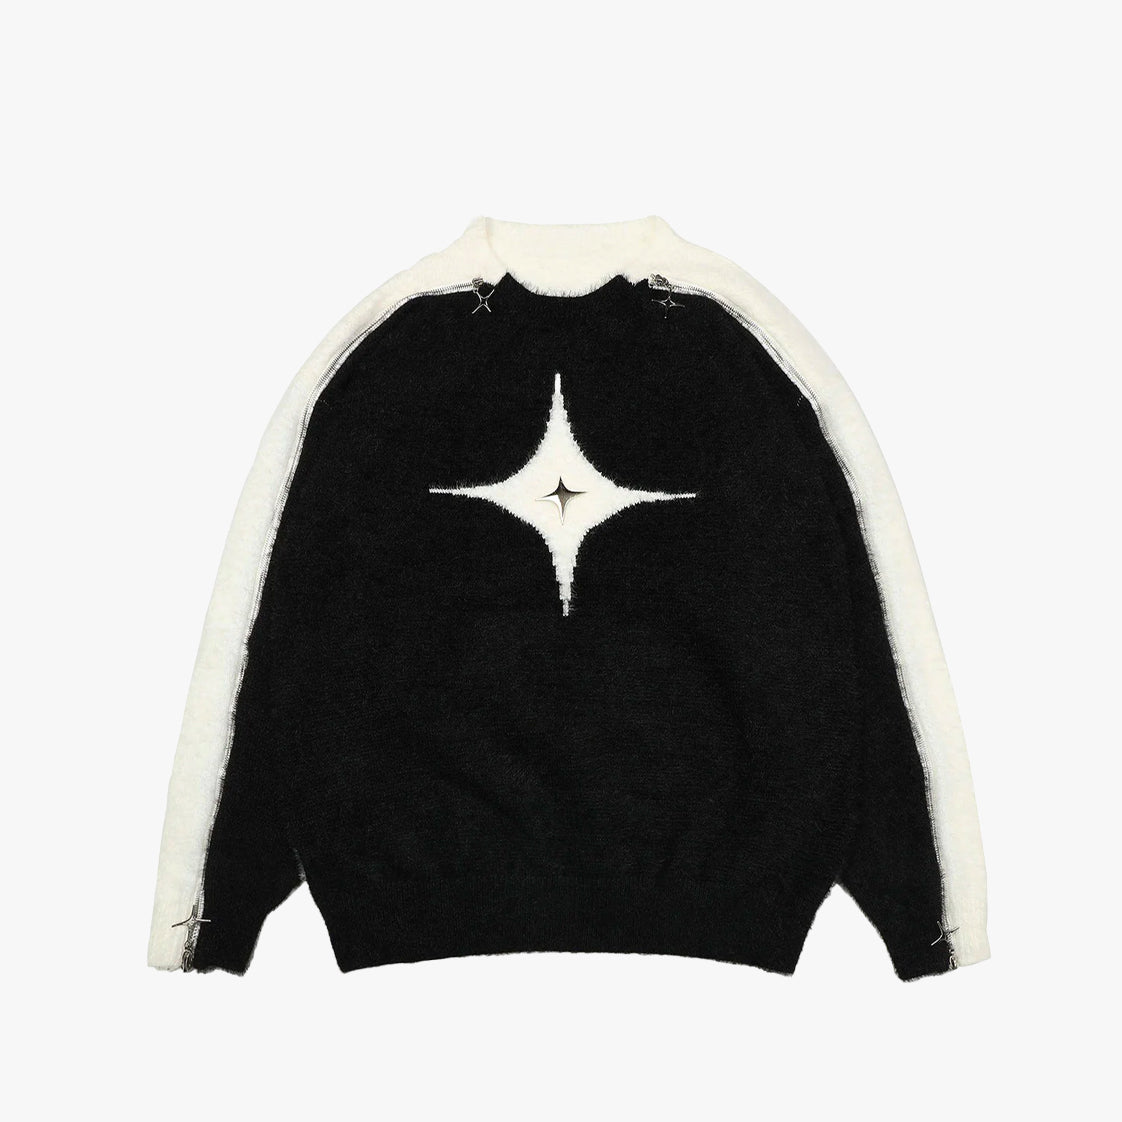 Hollow Star Open-Shoulder Sweater